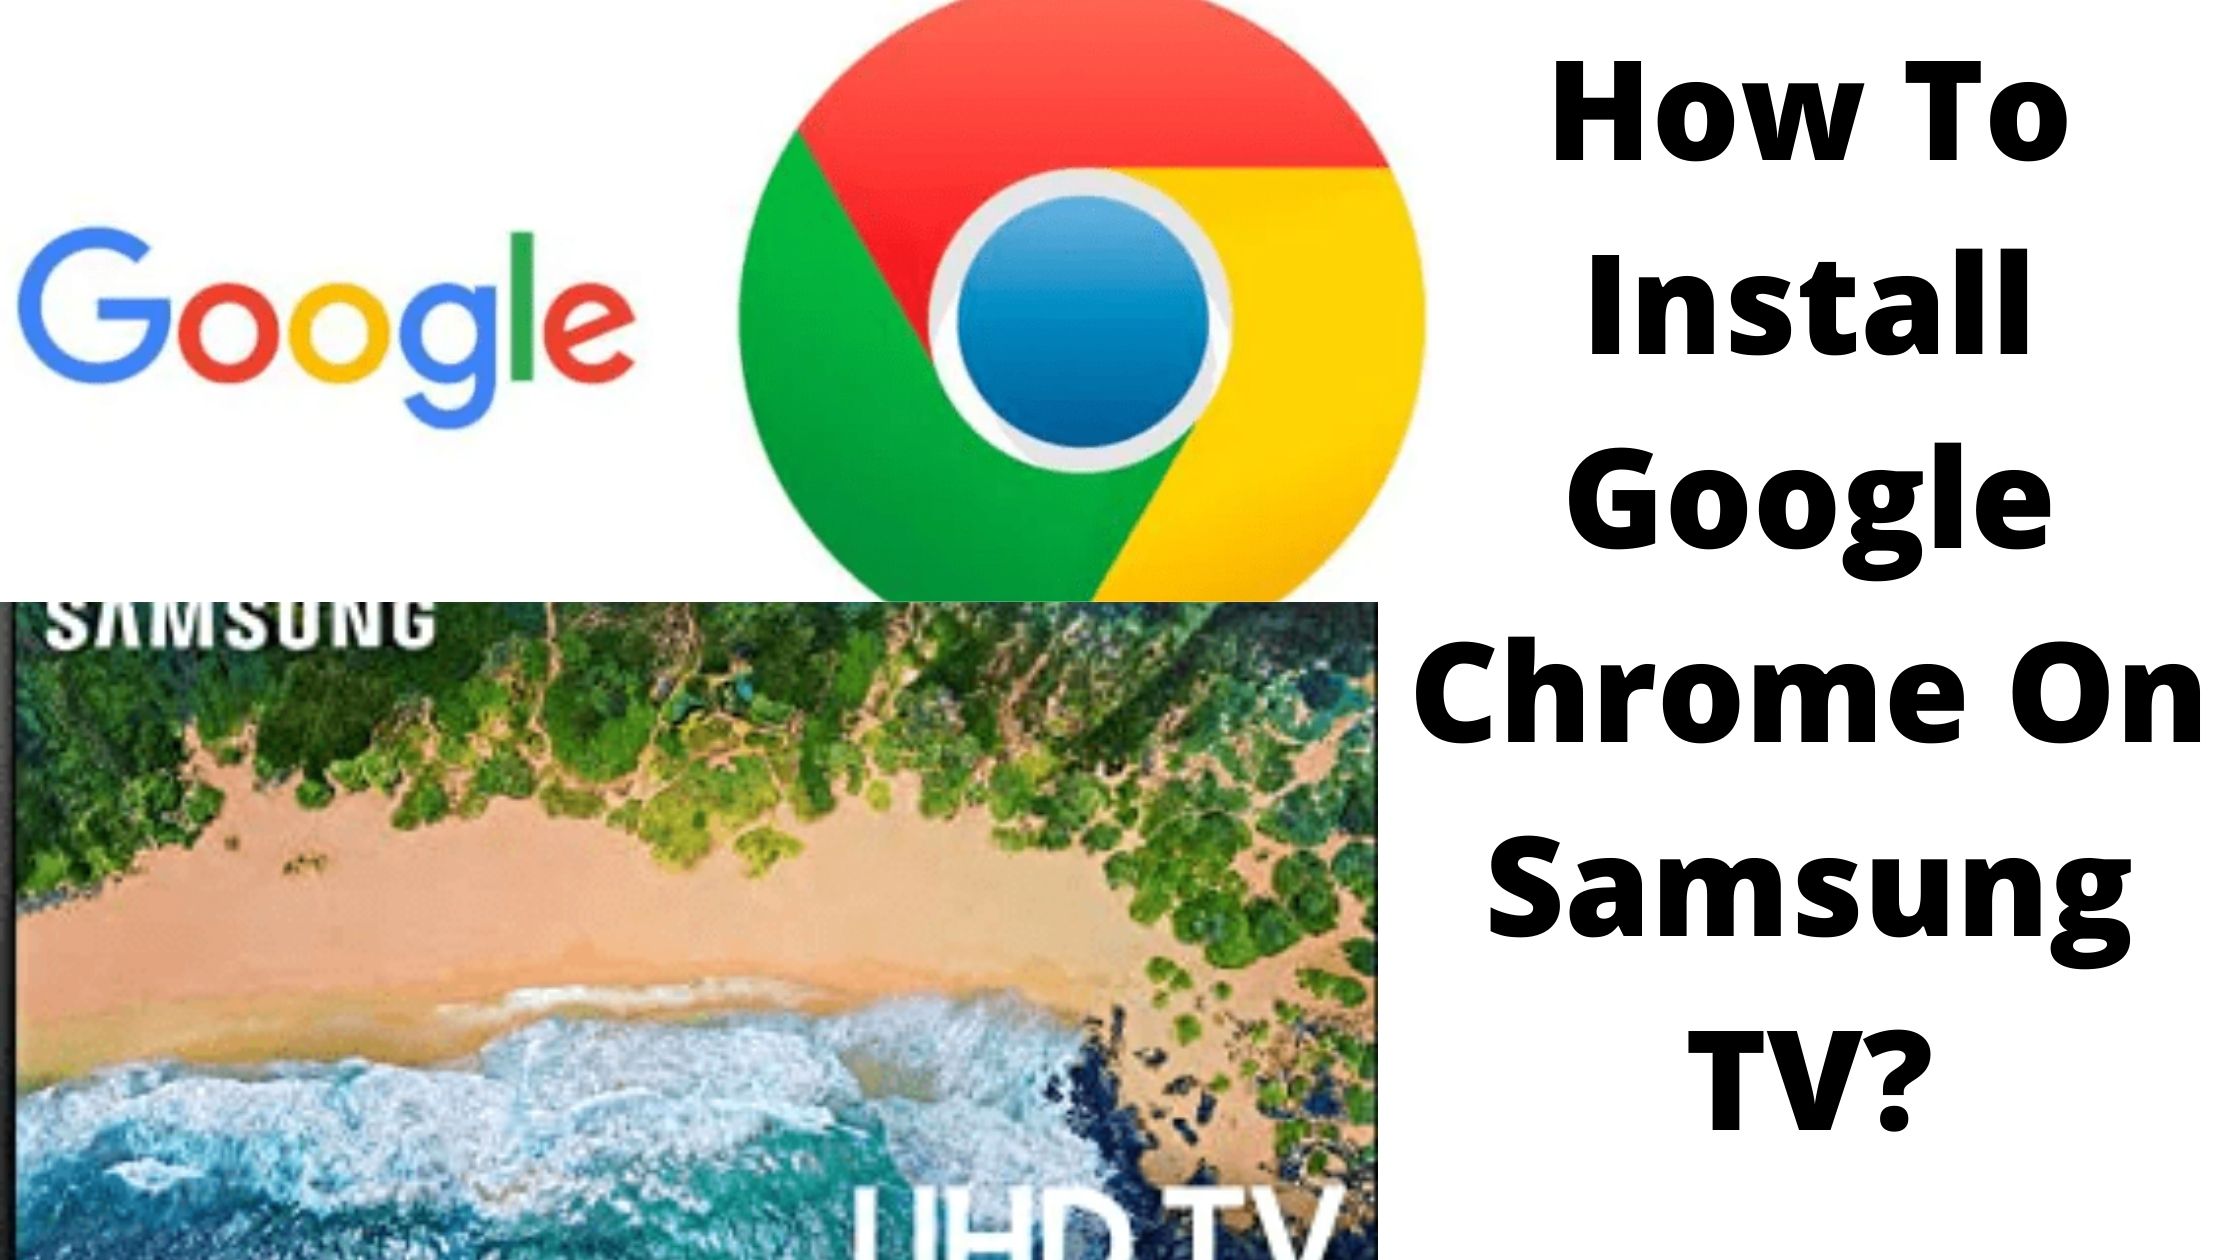 How To Install Google Chrome On Samsung TV